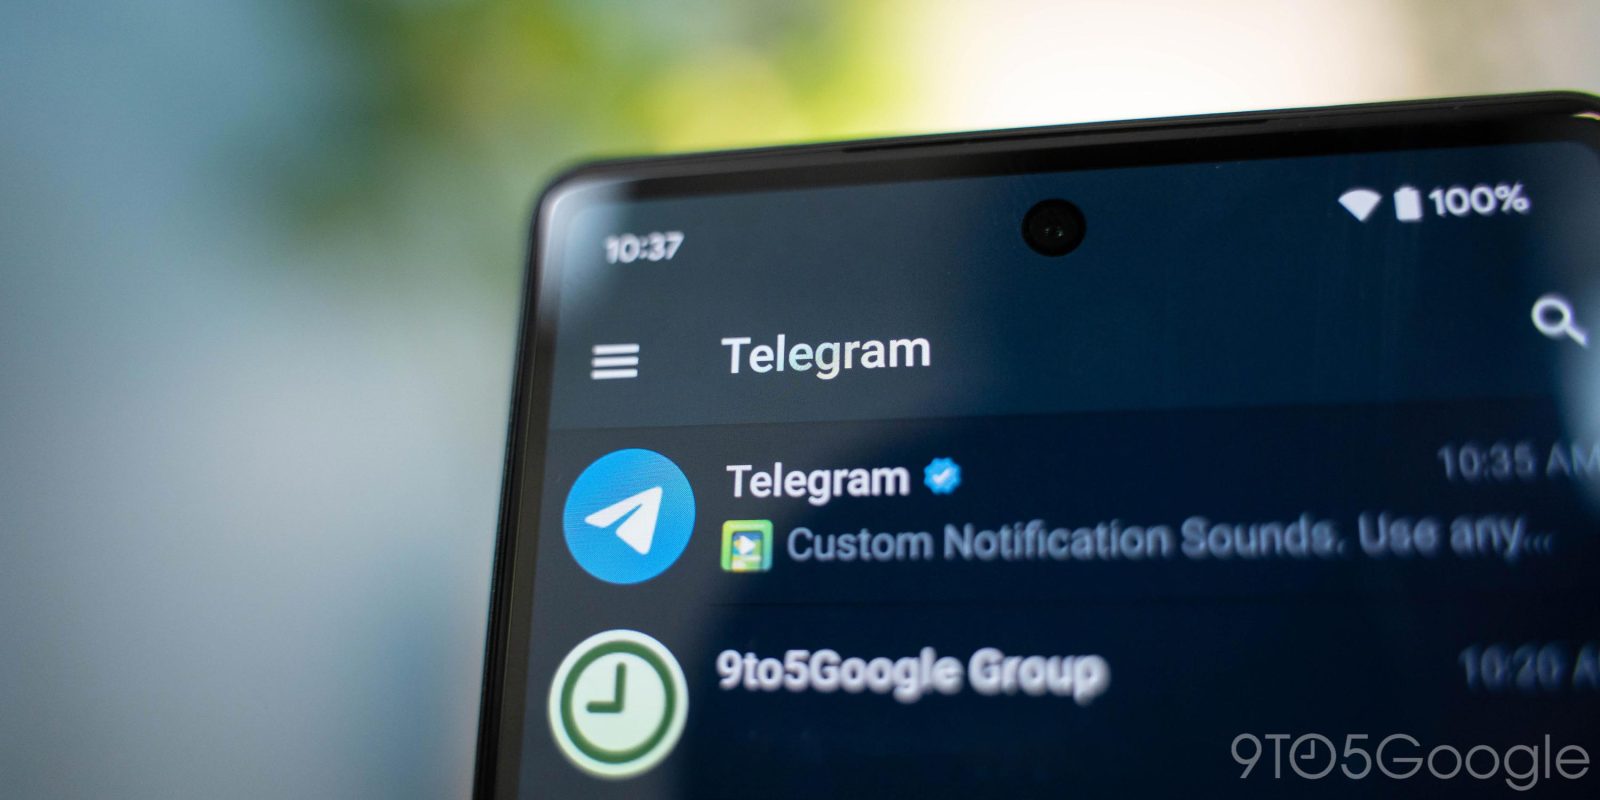 telegram sign up